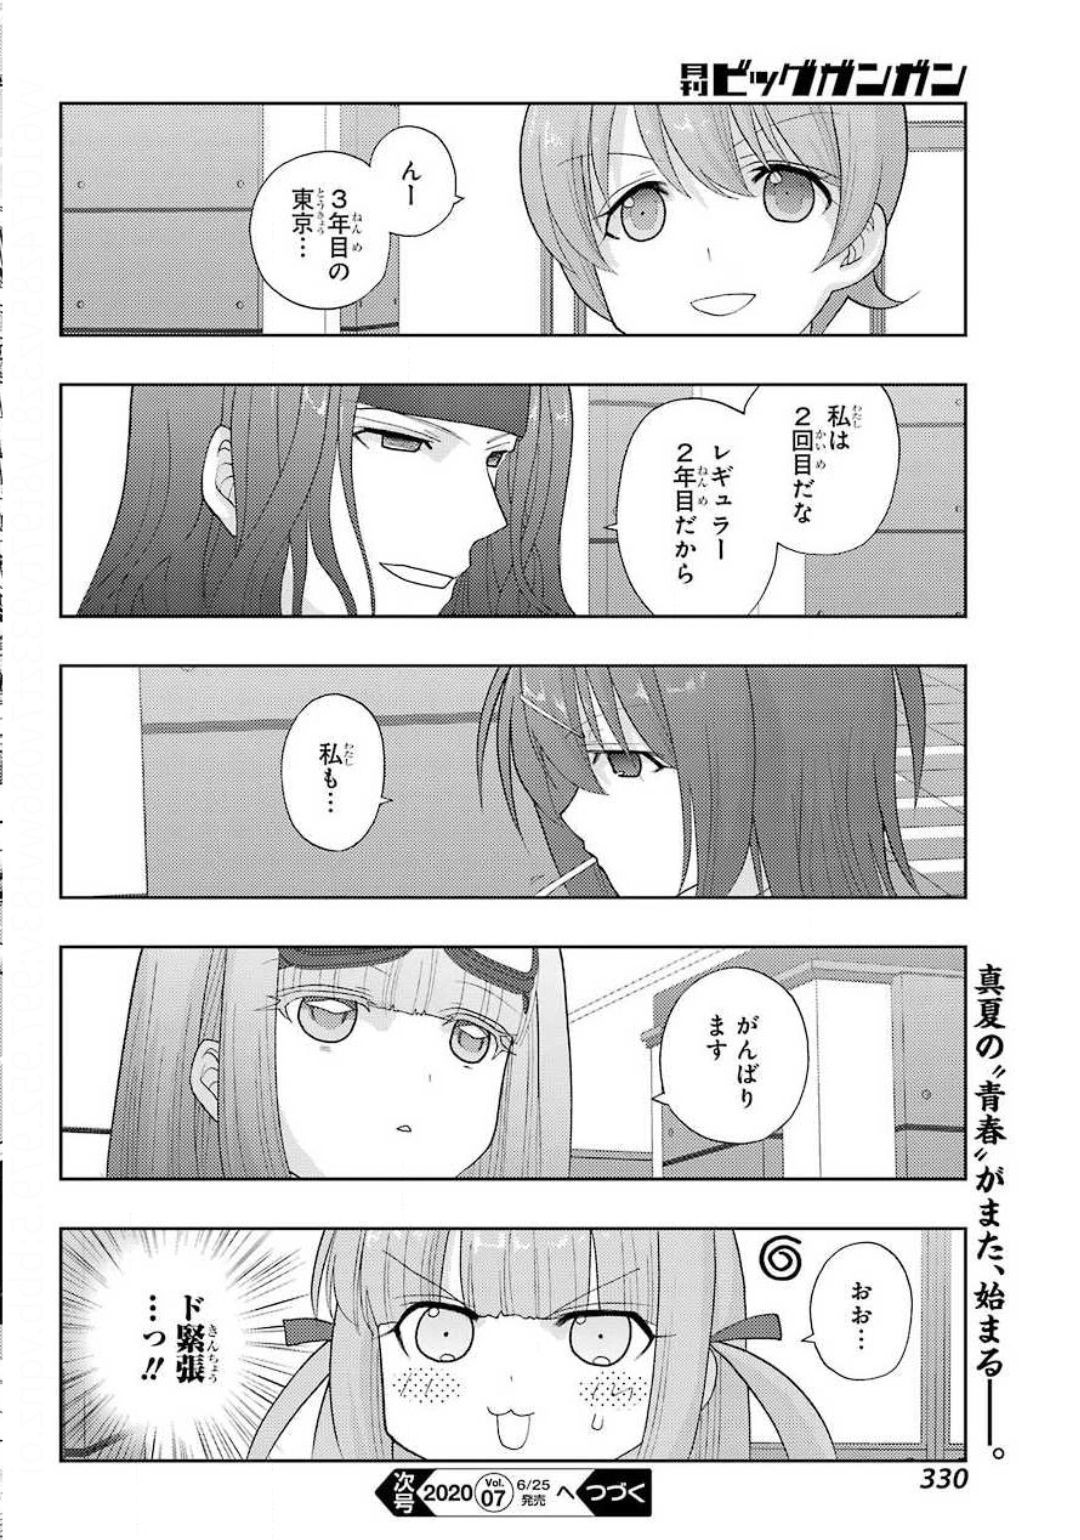 Shinohayu - The Dawn of Age Manga - Chapter 079 - Page 20